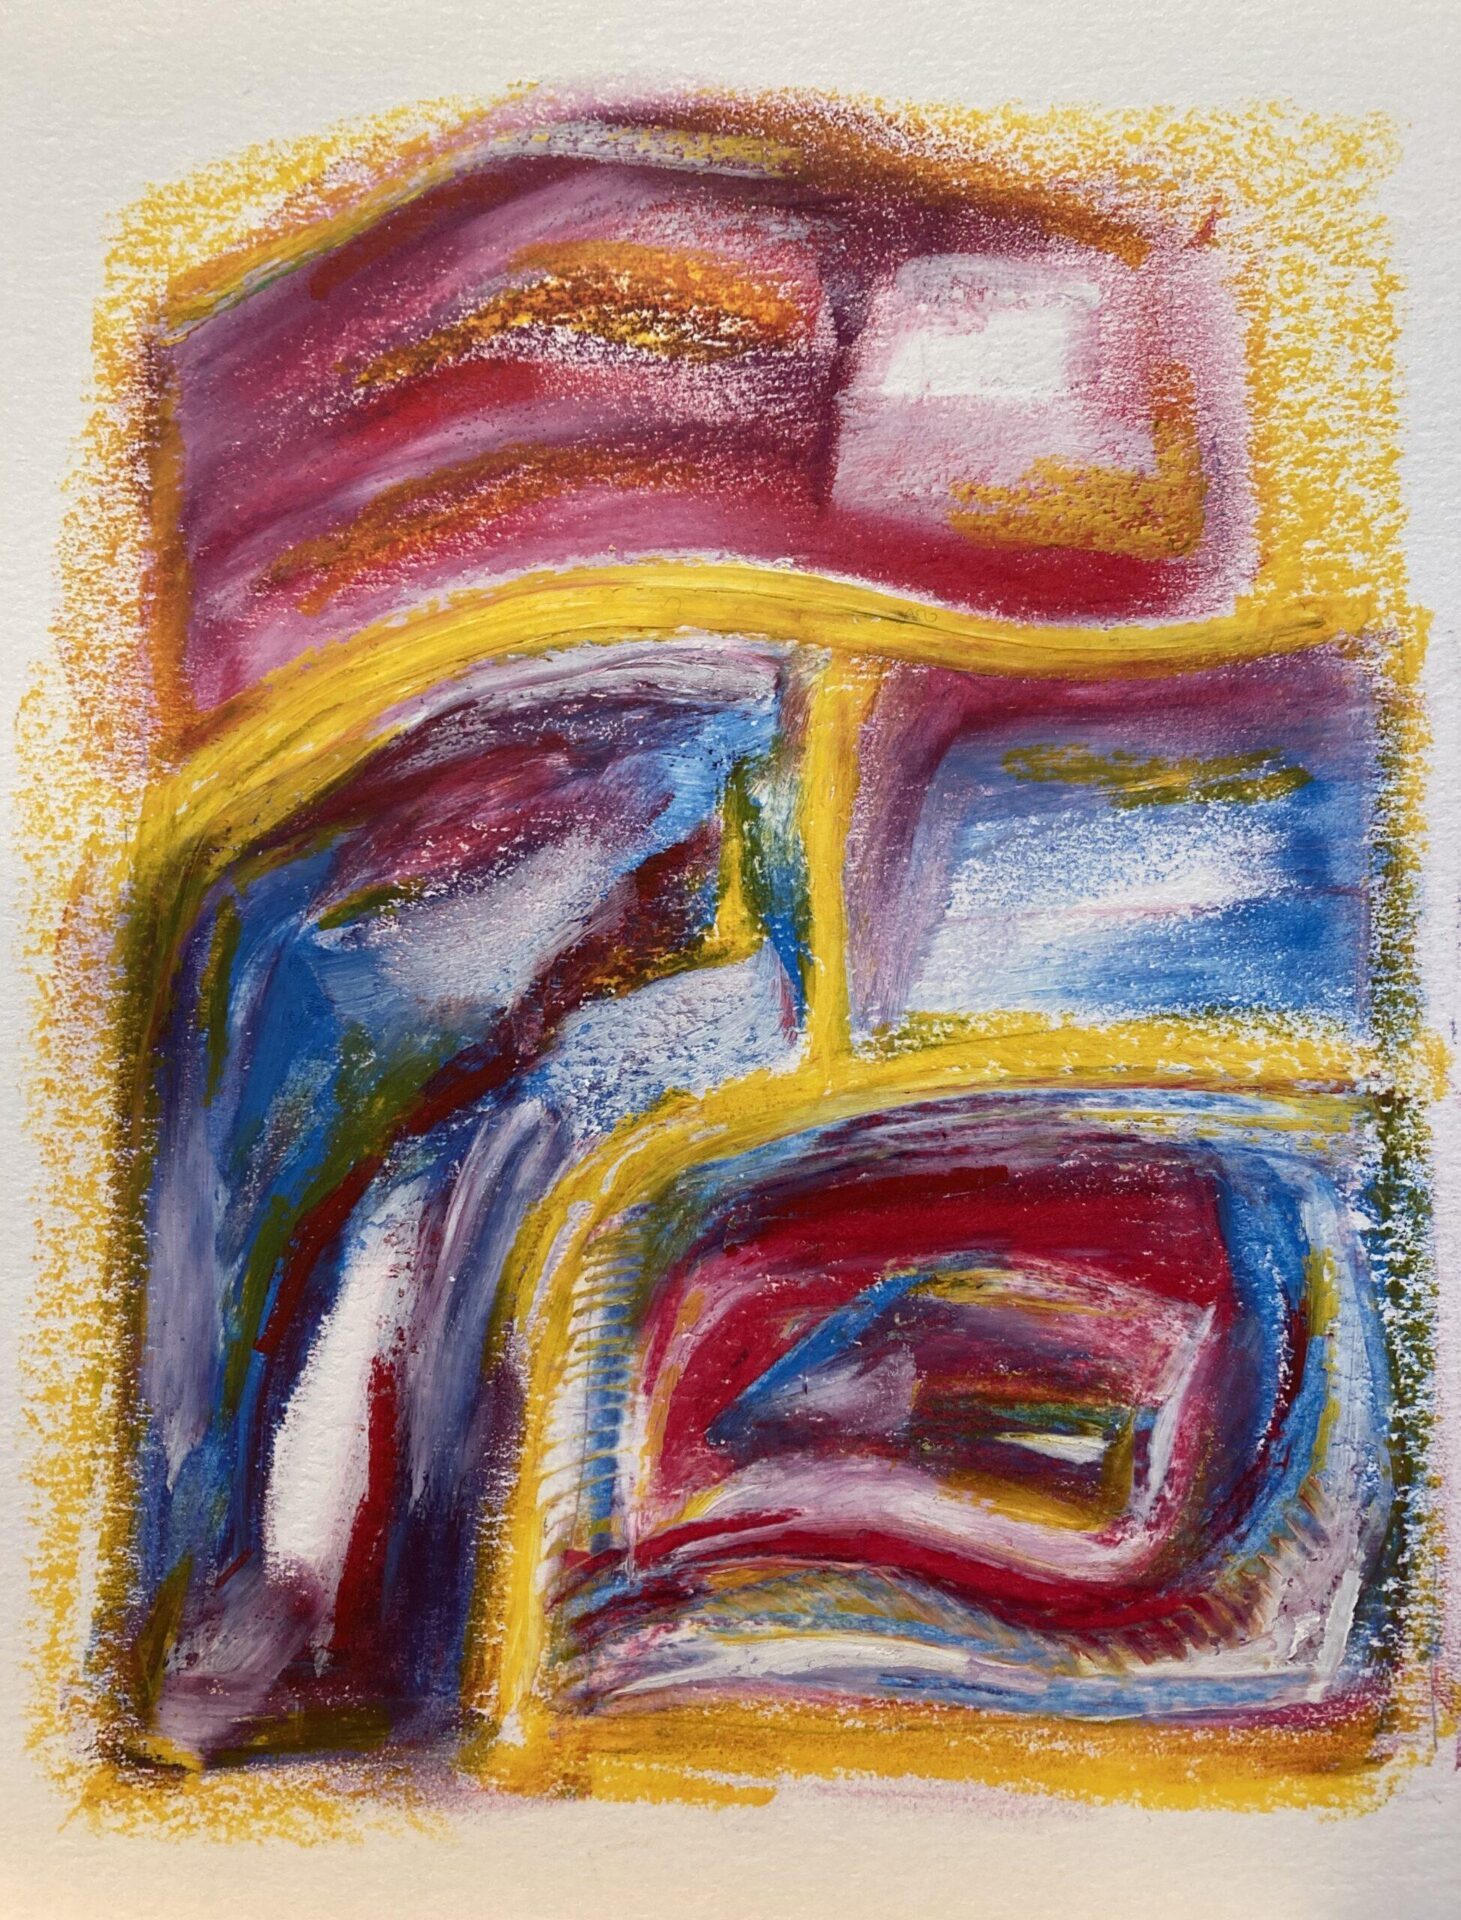 Dolgoch Impression 6, oil pastel on paper, 140 x 170